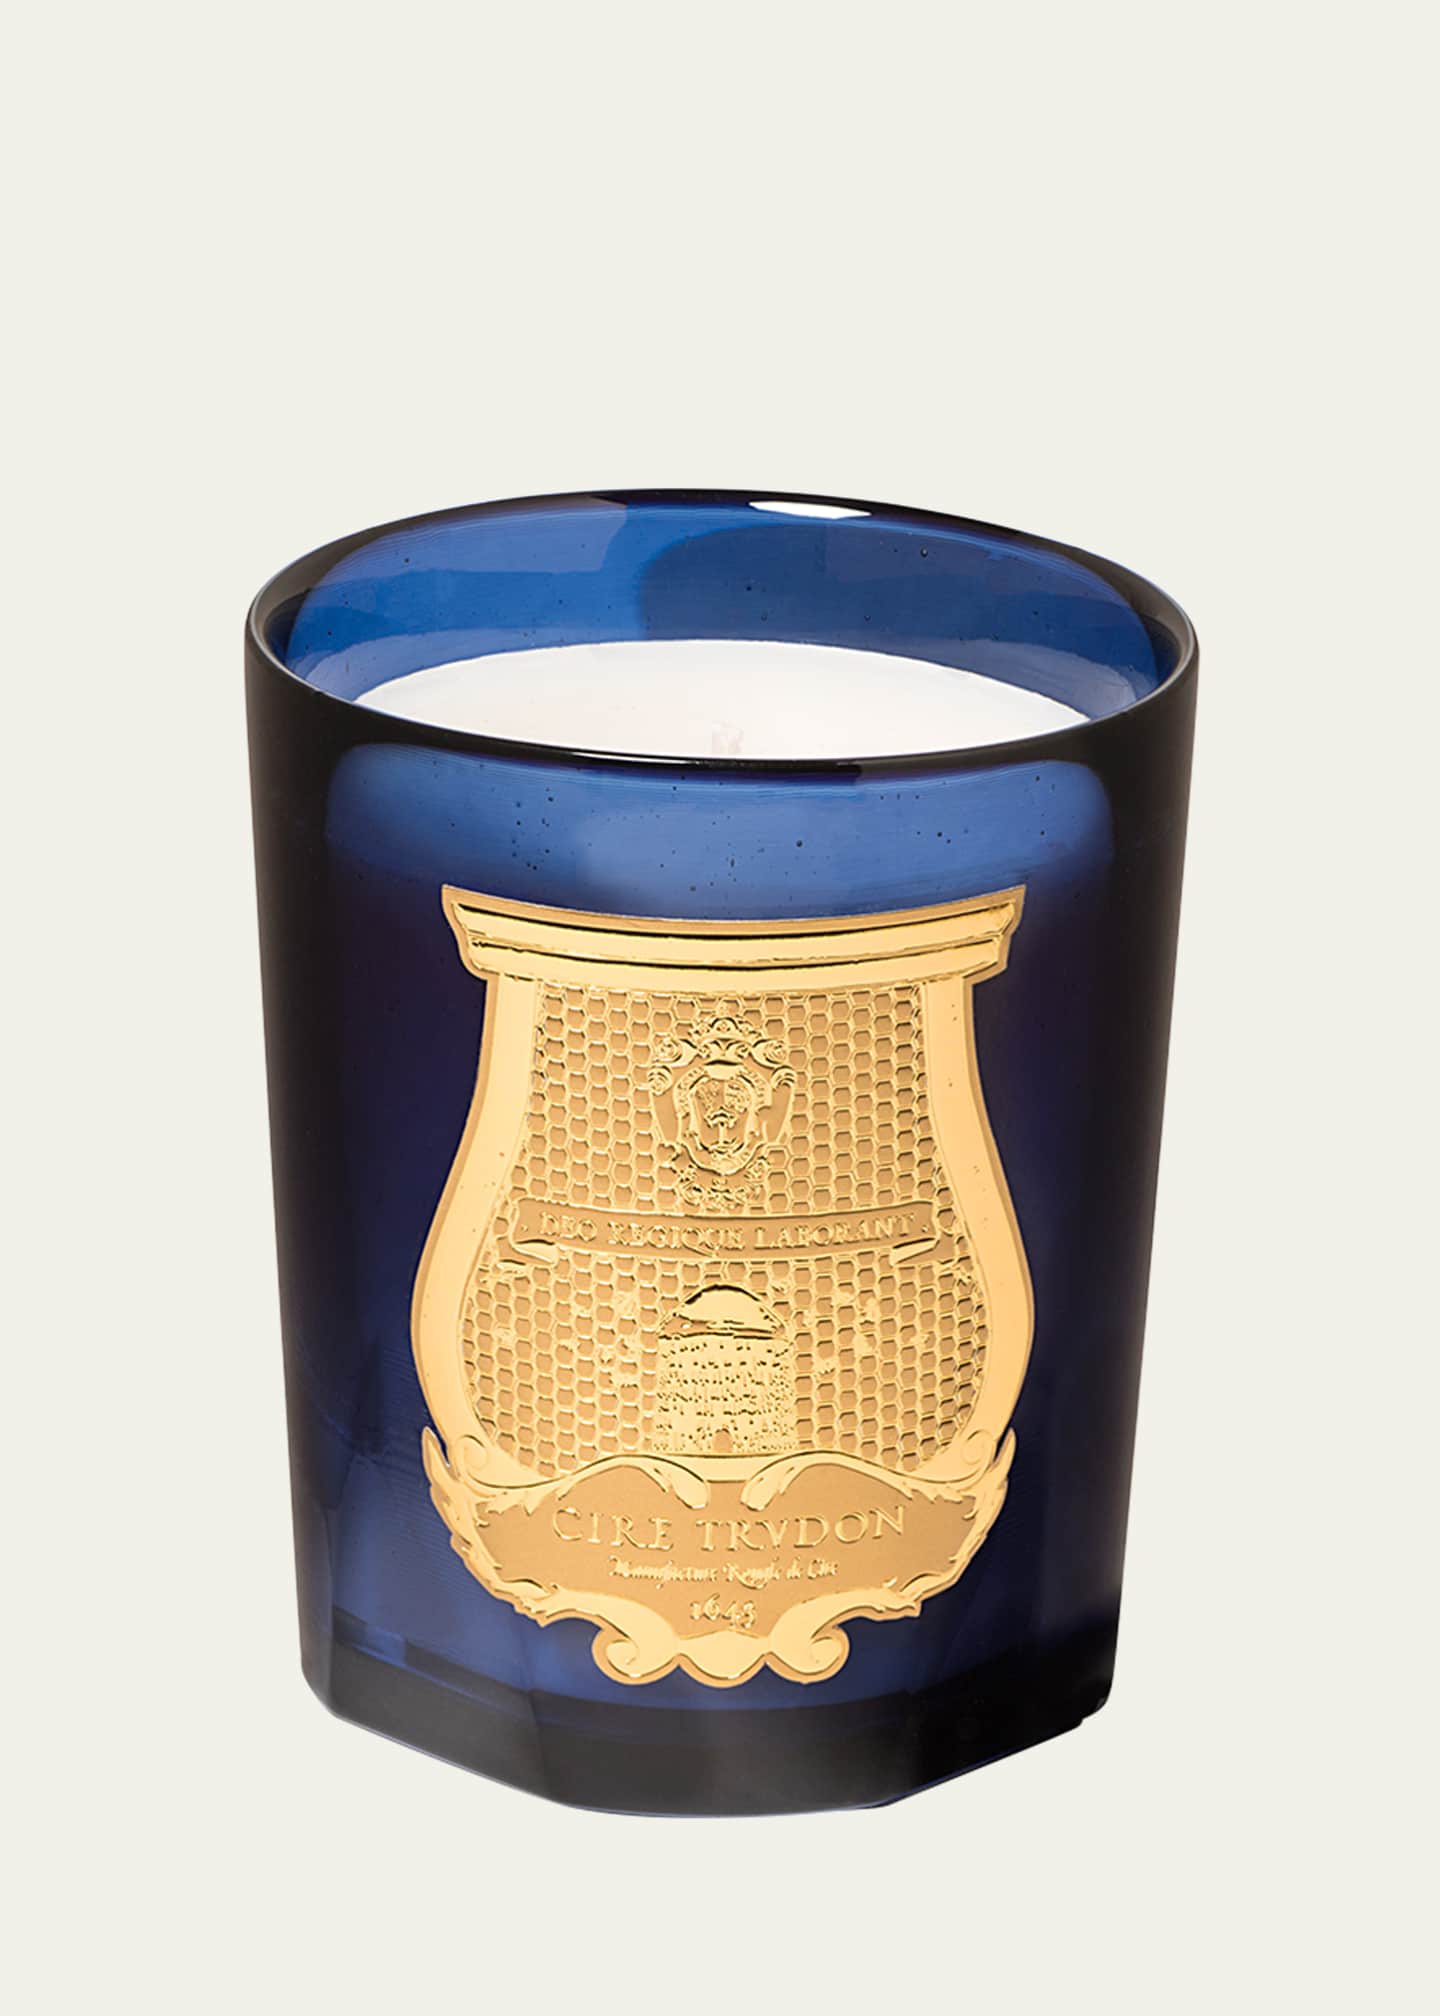 Trudon Esterel Classic Candle, Mimosa - Bergdorf Goodman